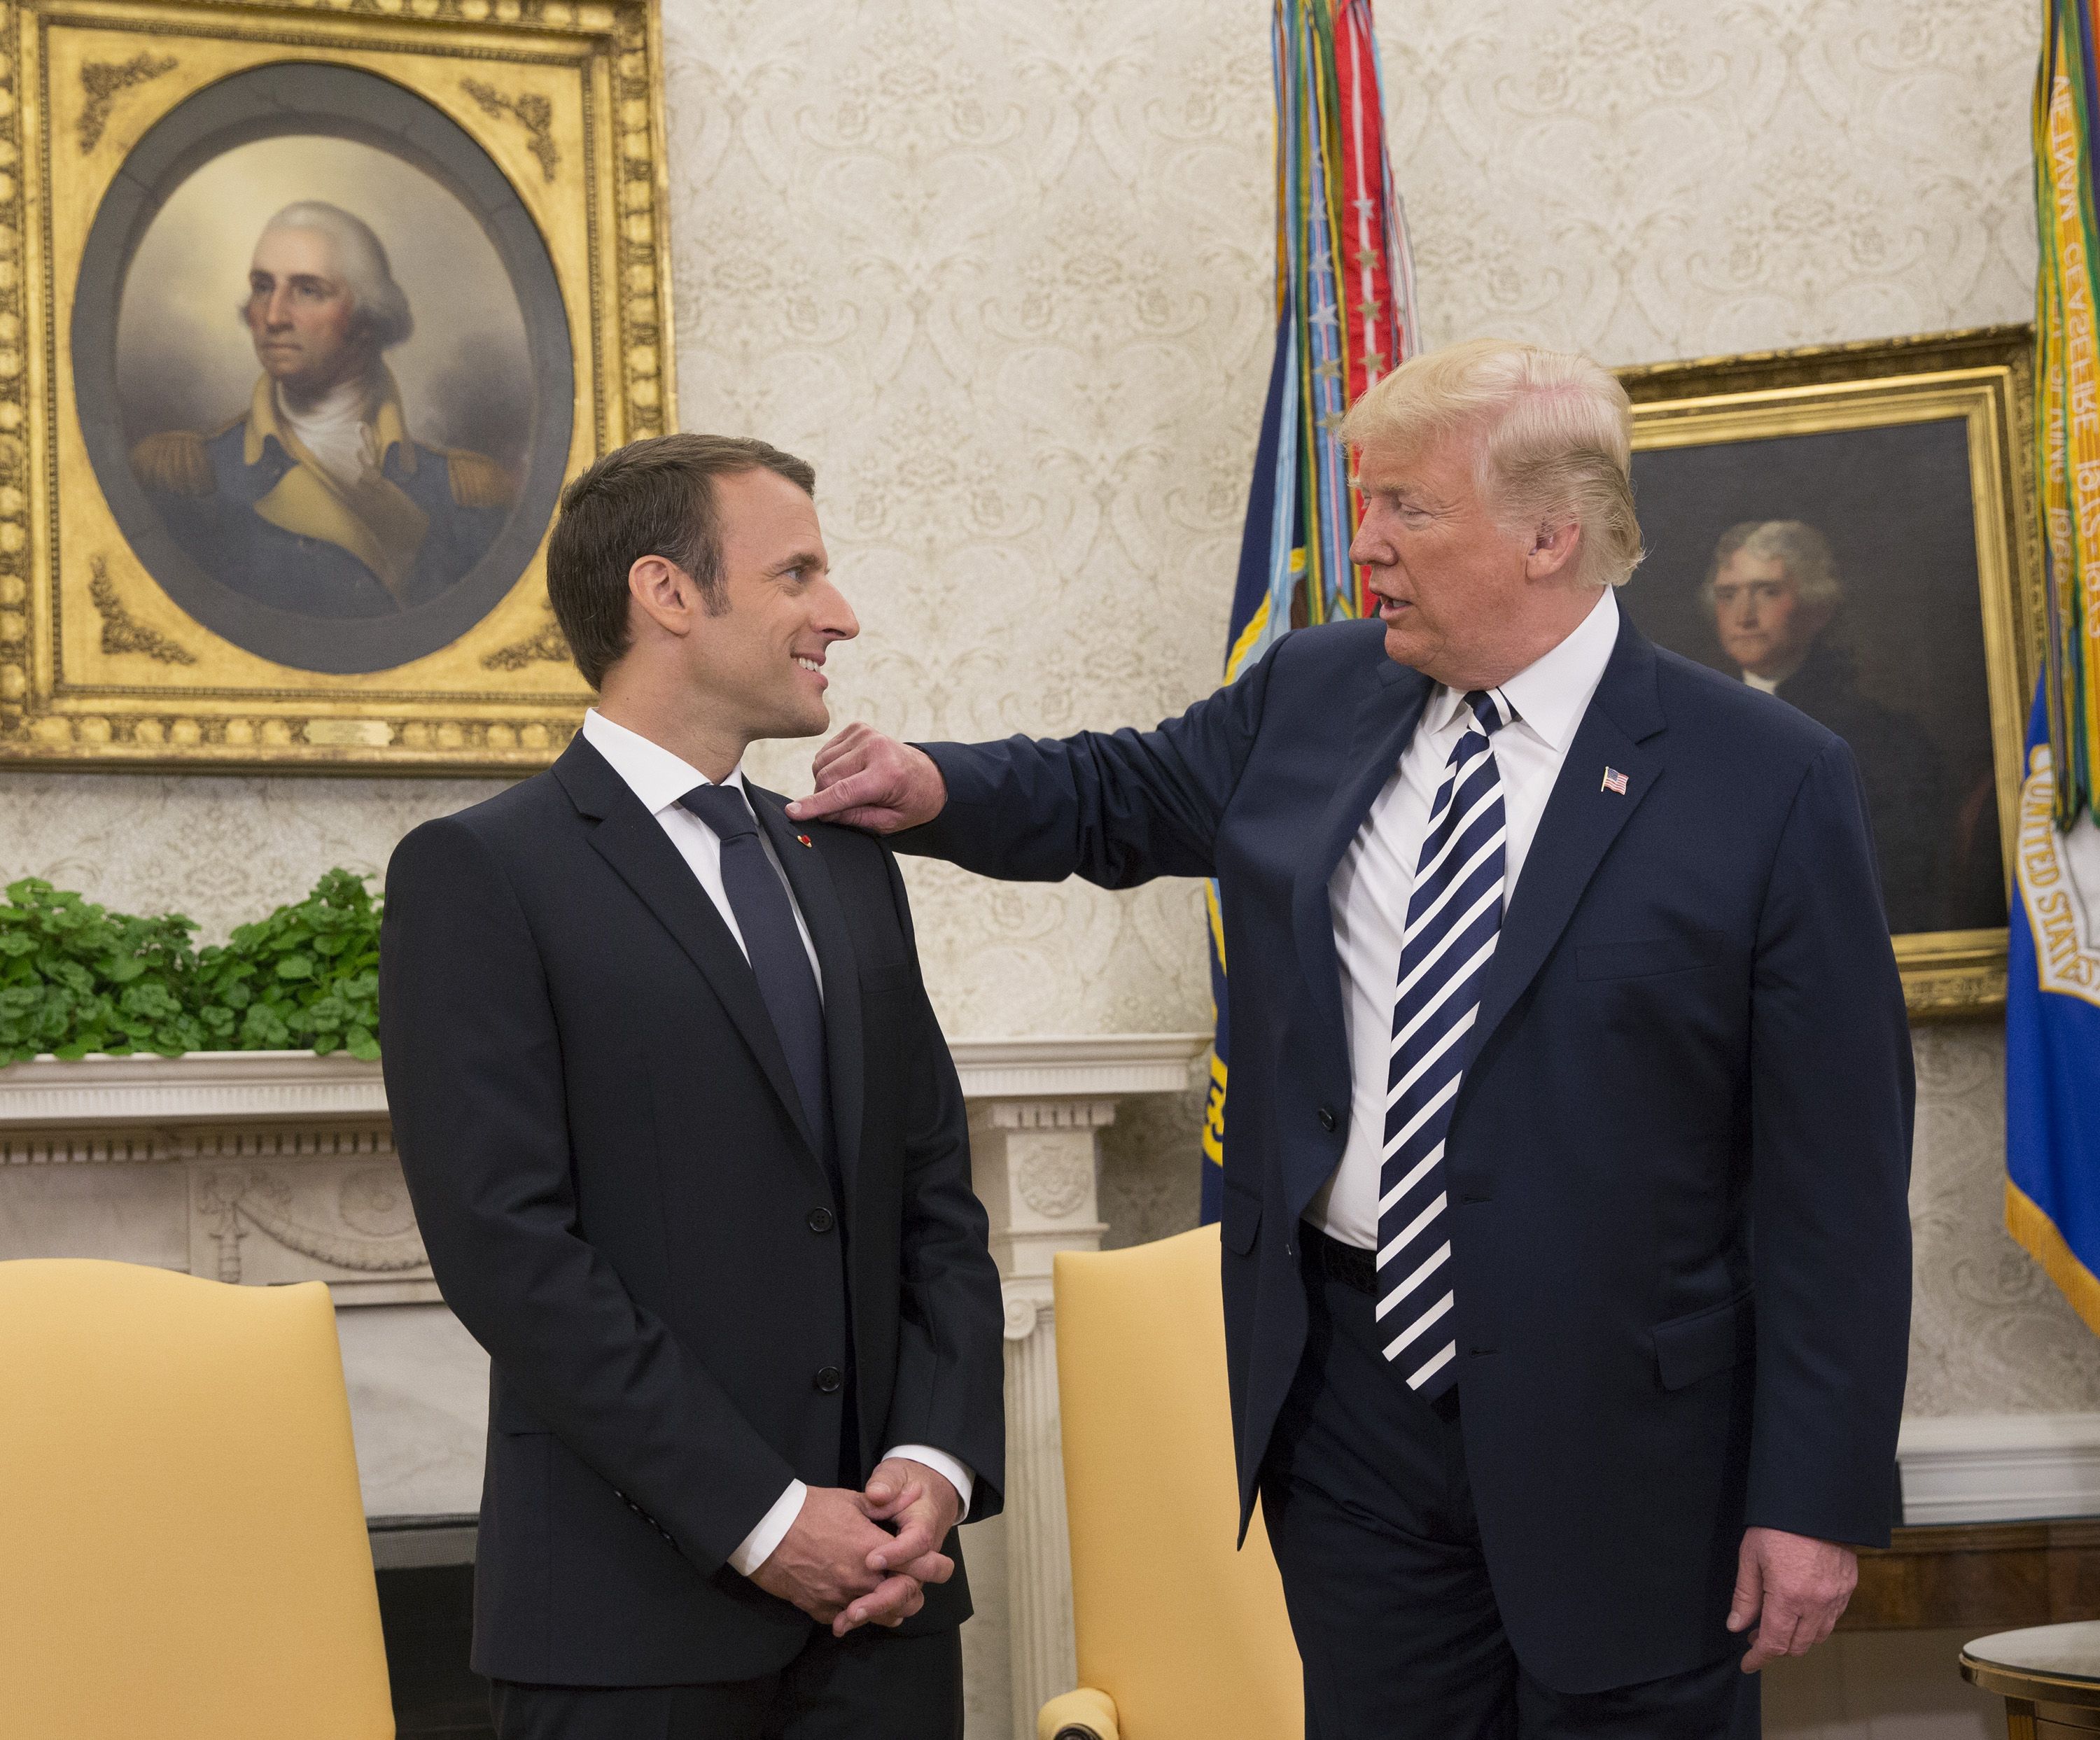 Trump flicks dandruff off Macron's jacket